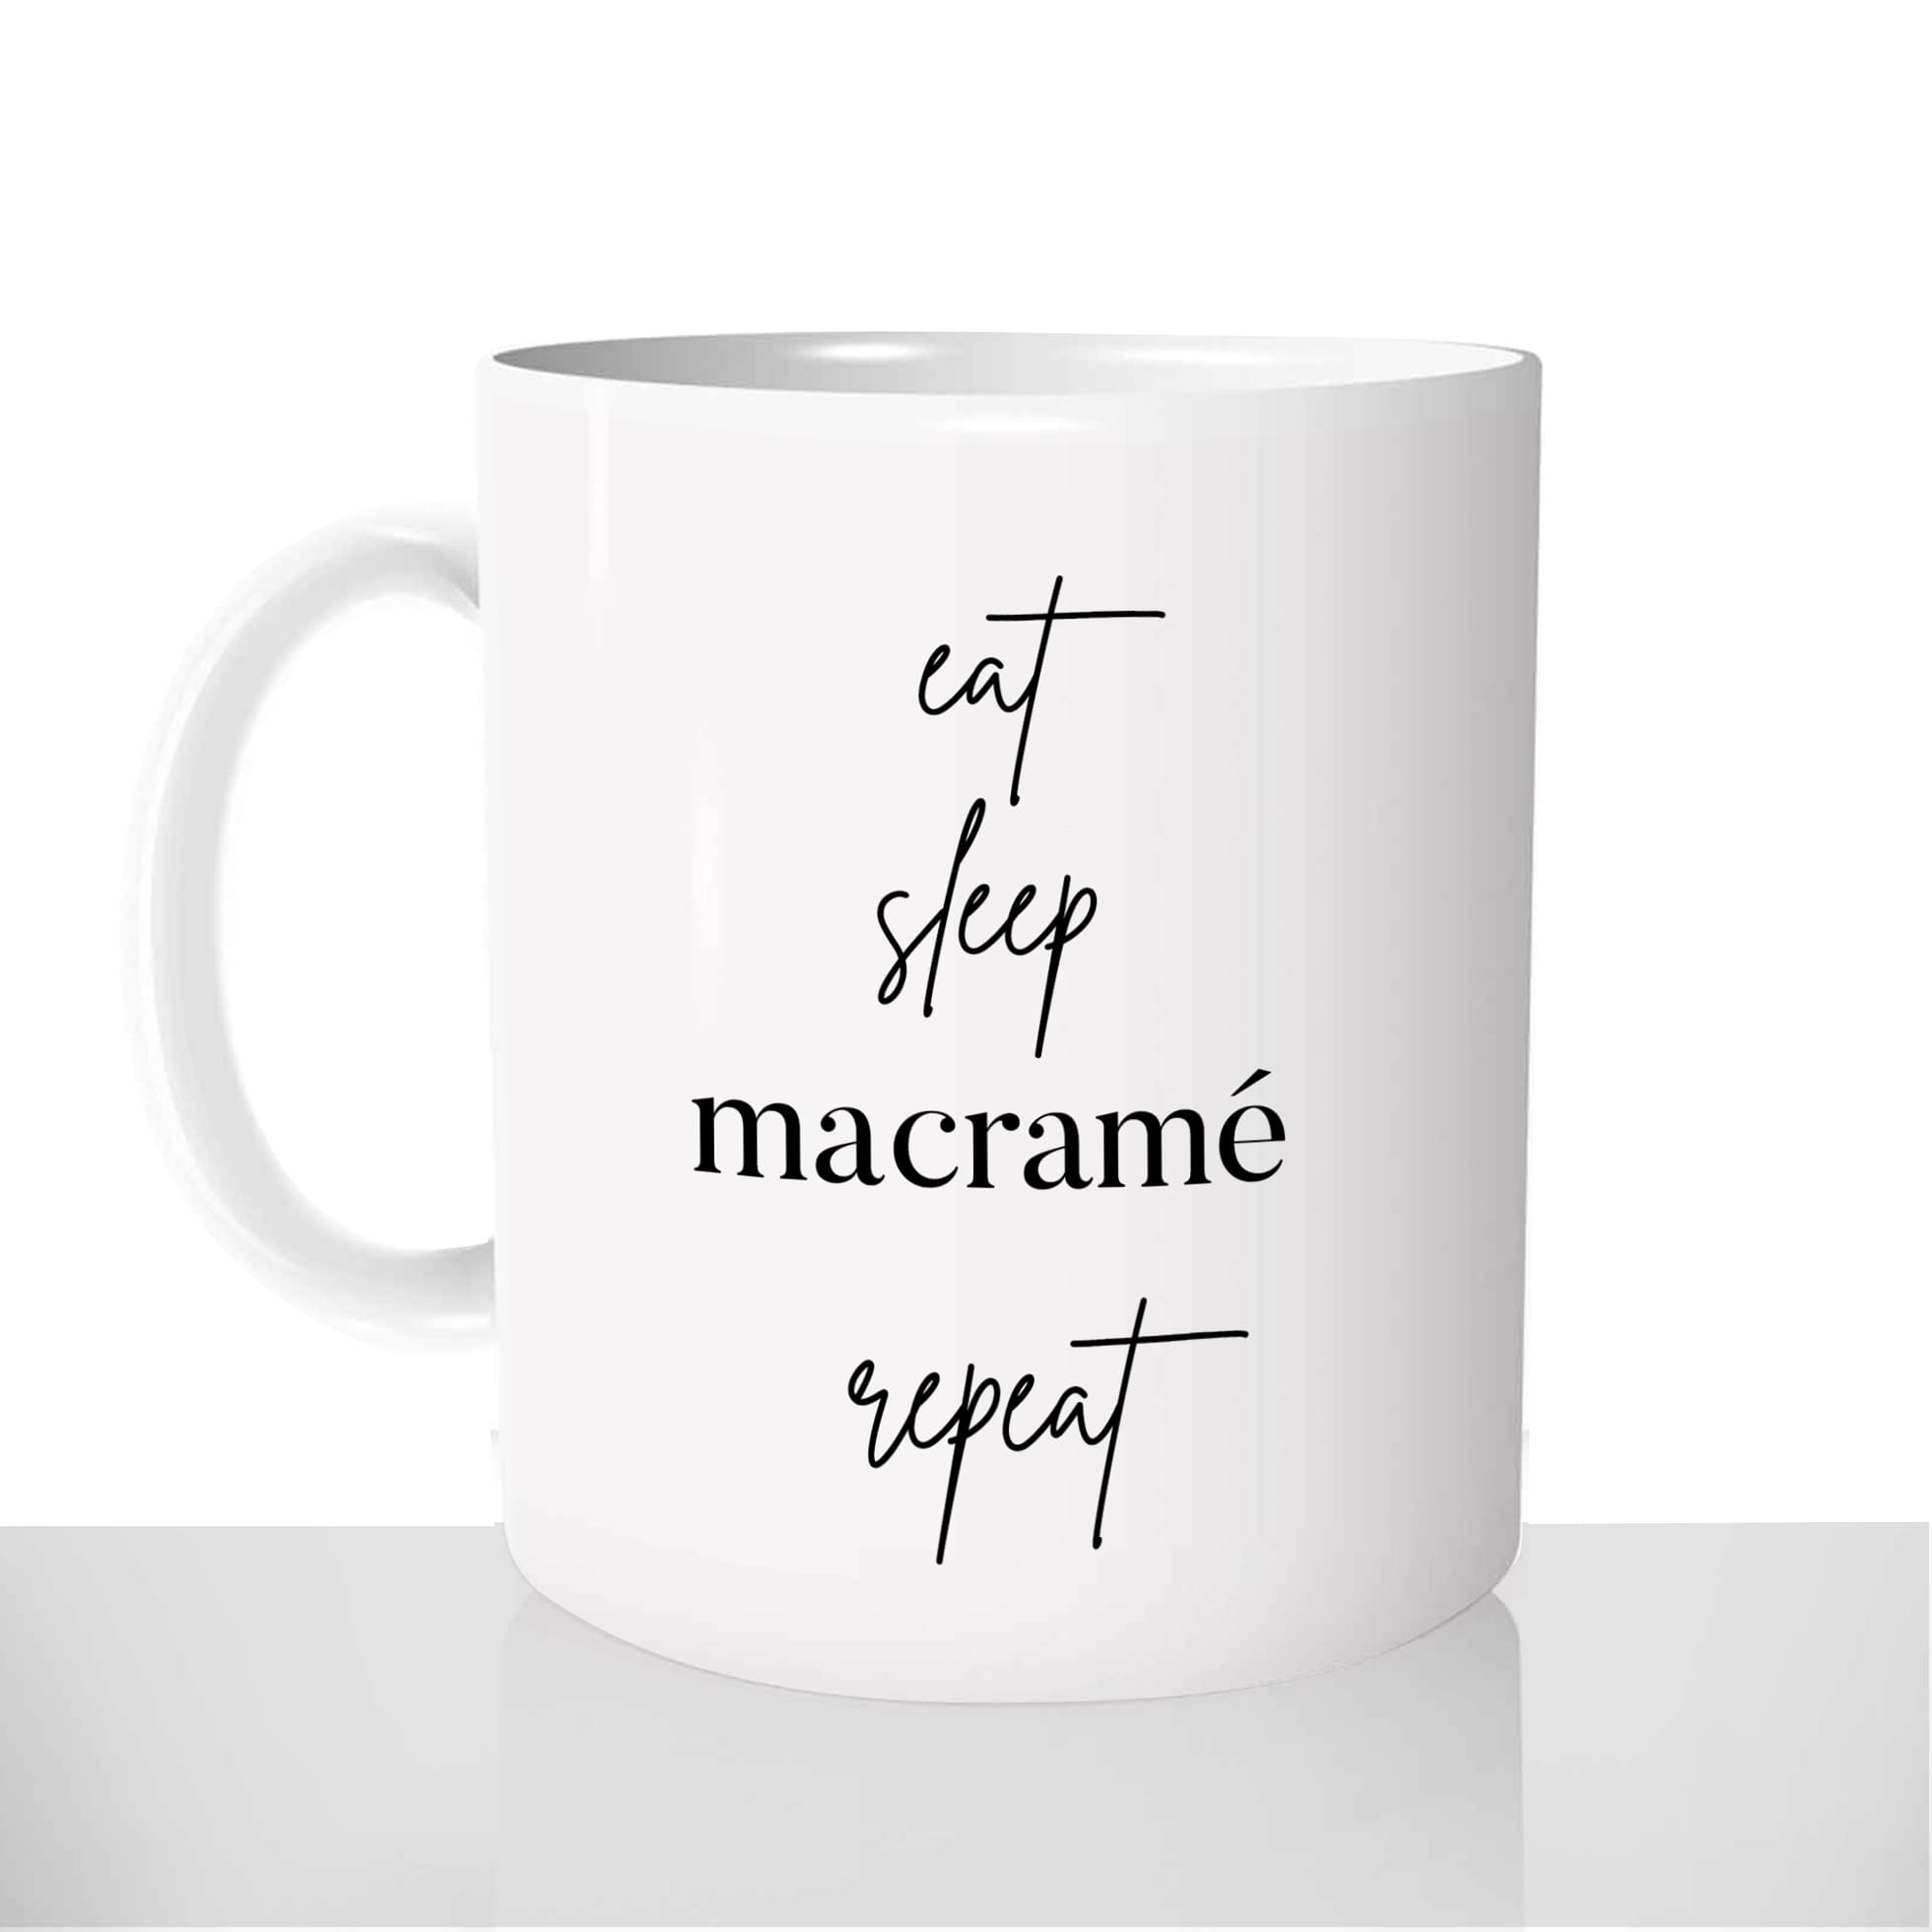 mug - blanc-brillant-personnalisé-pas-cher-eat-sleep-macramé-repeat-femme-diy-personnalisé-fun-idée-cadeau-original